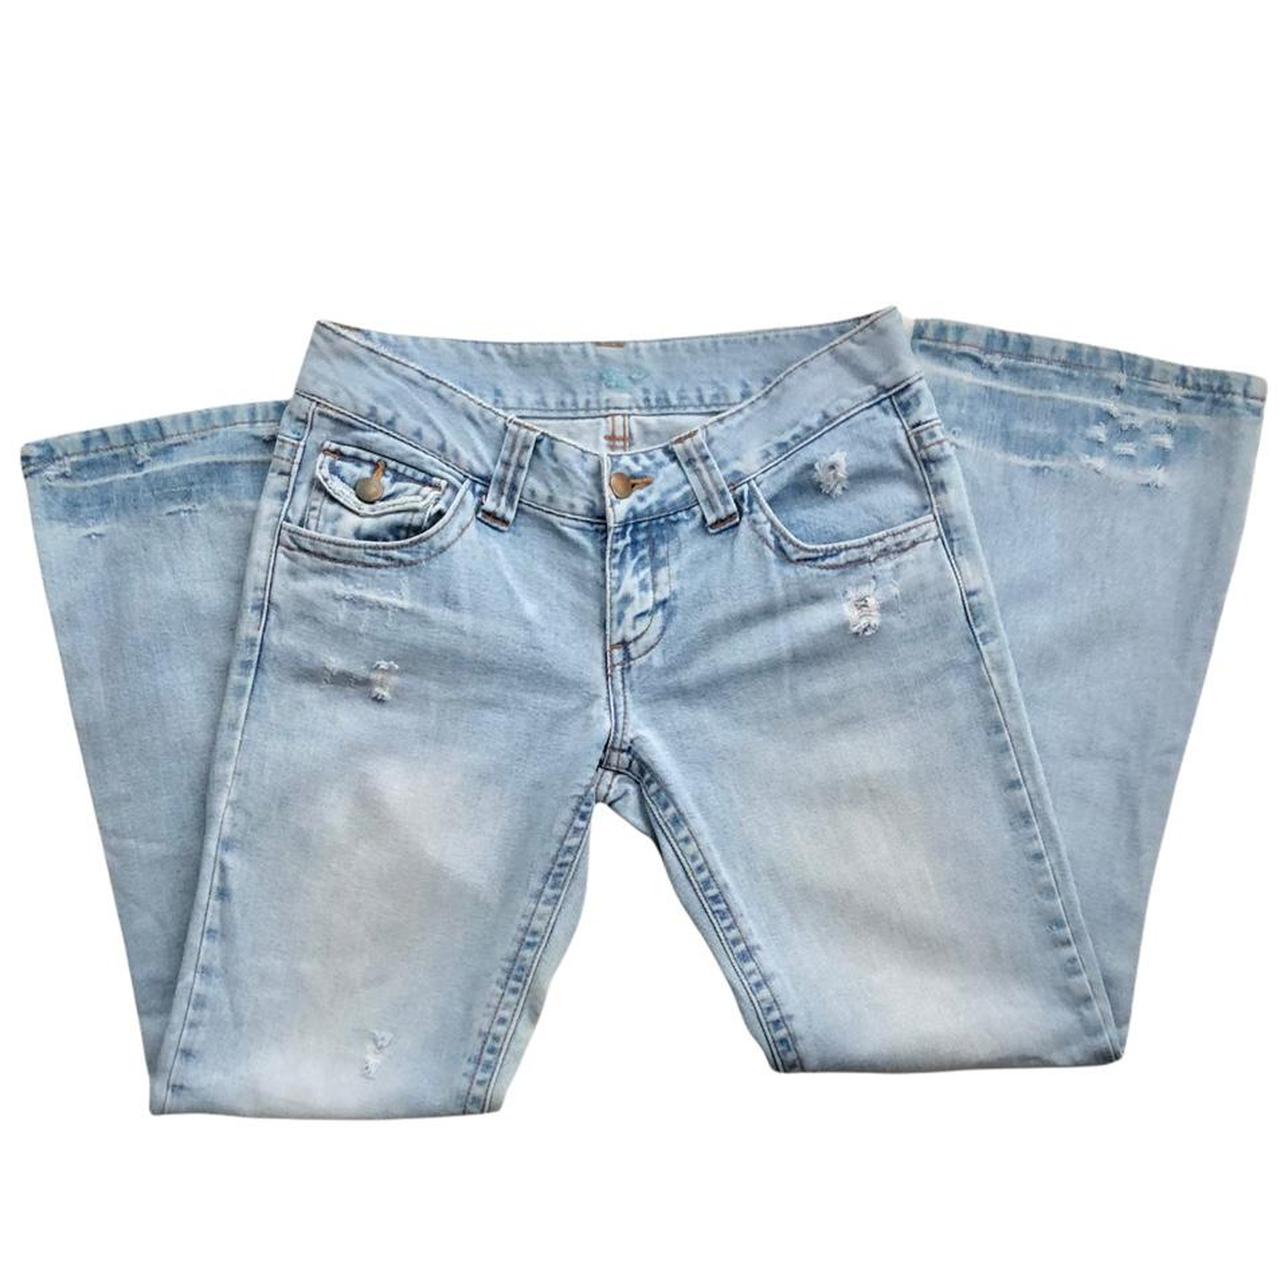 Product Image 1 - Y2k jeans light blue wash